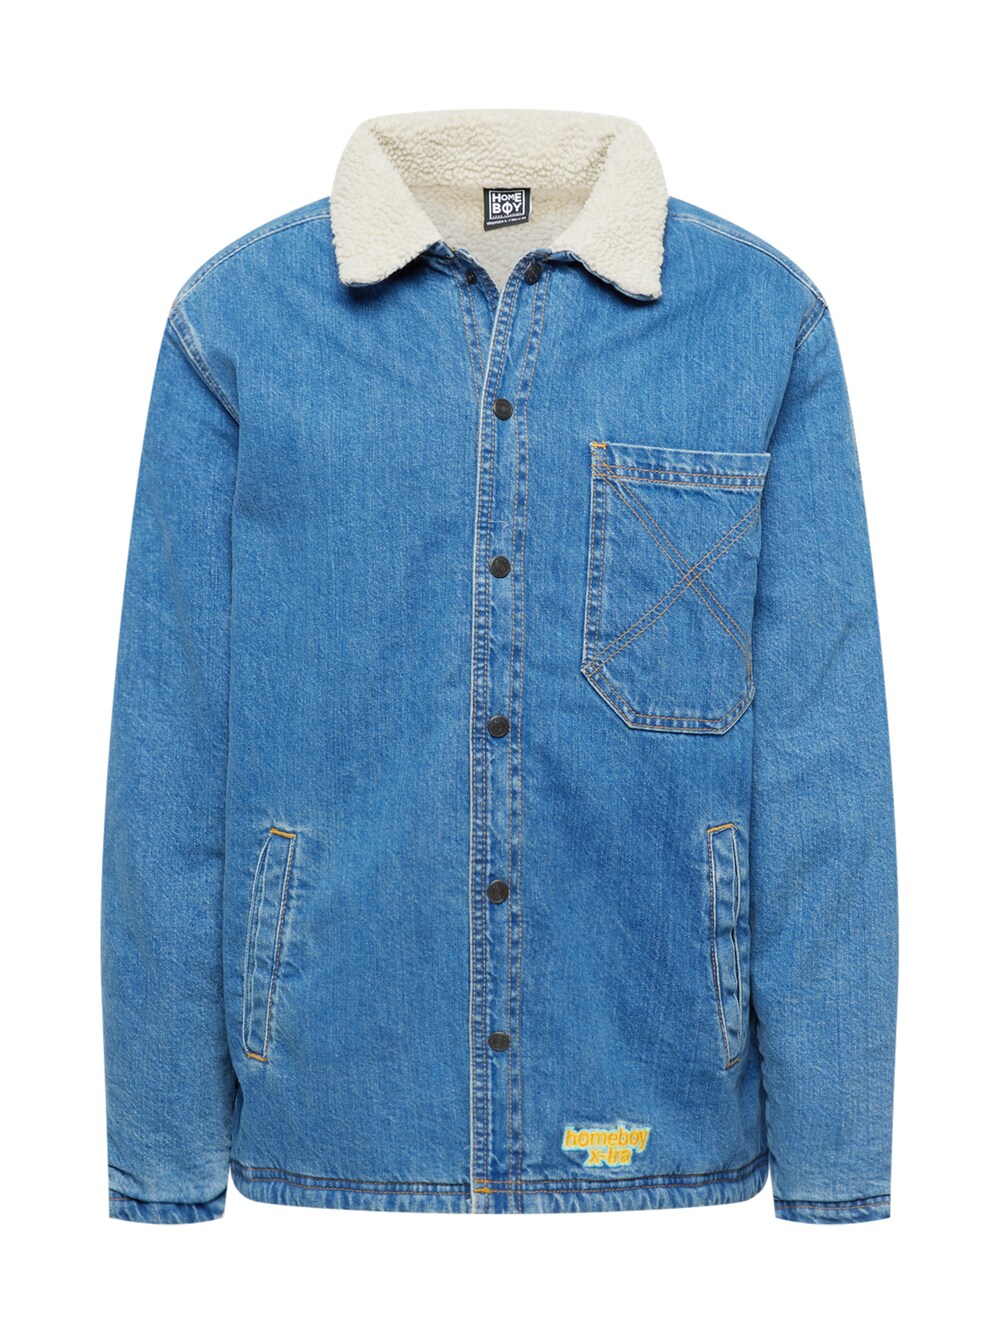 Межсезонная куртка Homeboy SHERPA Jacket Denim, синий цена и фото